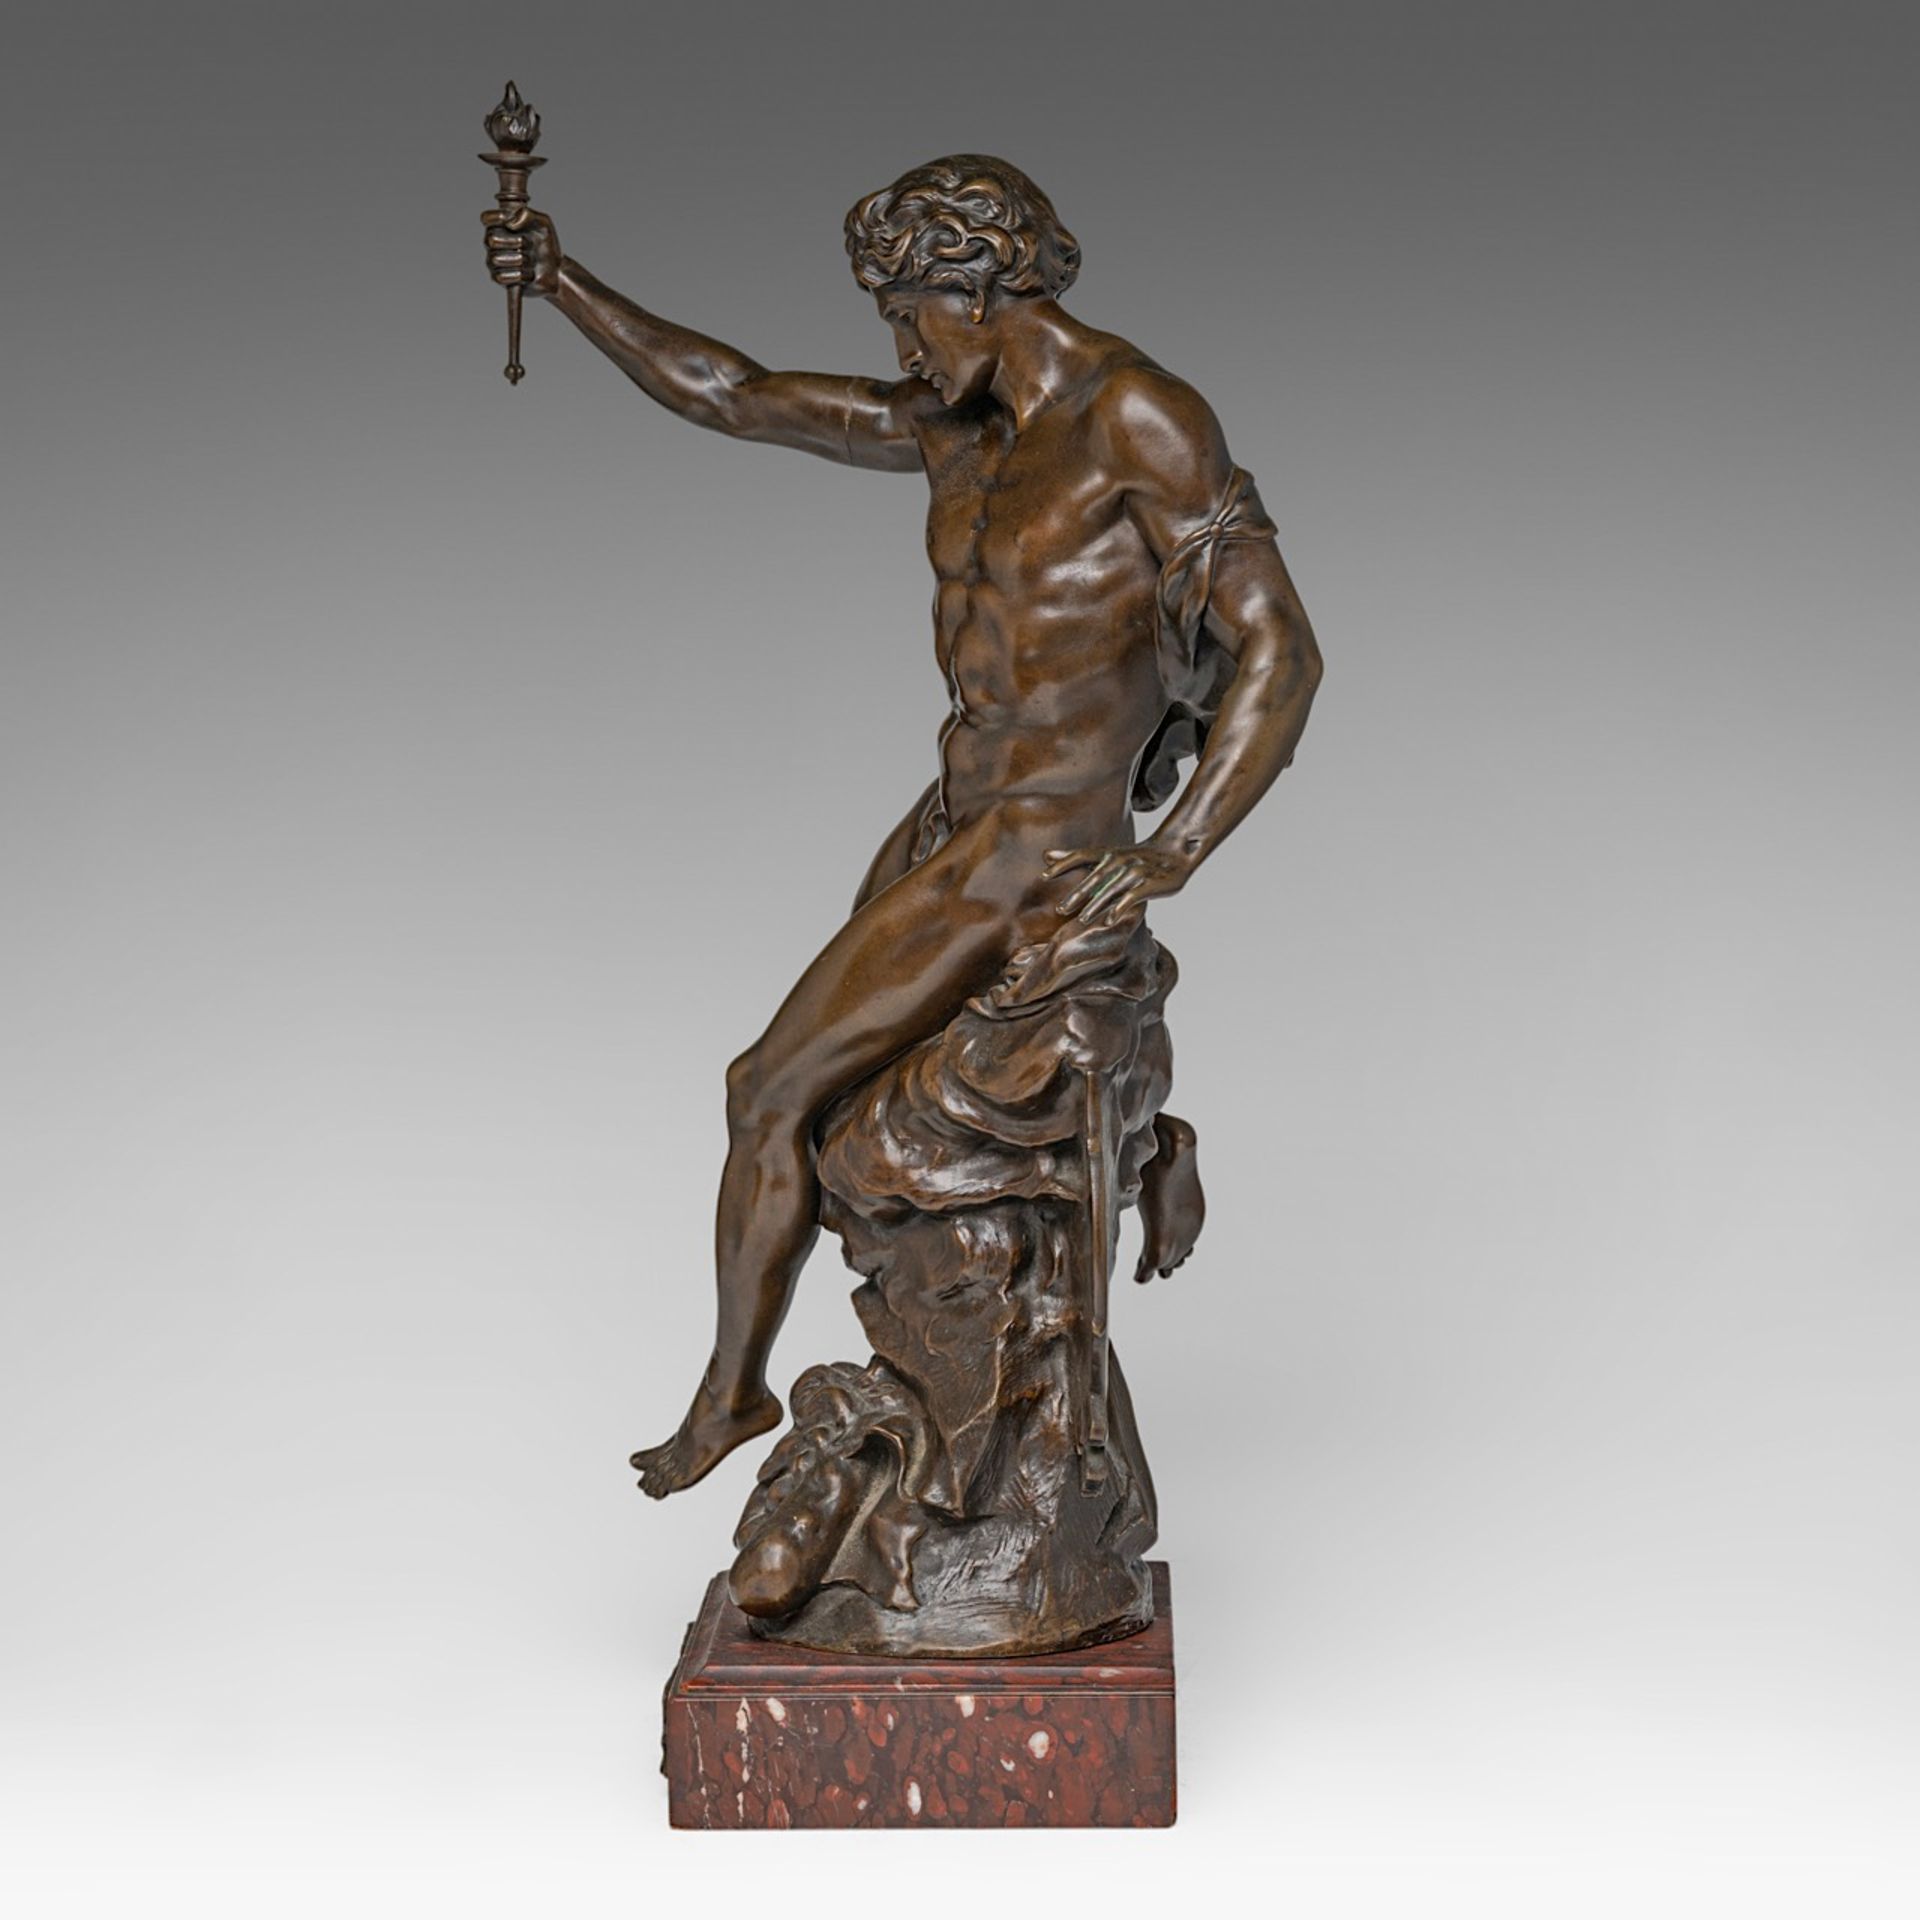 Emile Louis Picault (1833-1915), 'Excelsior', patinated bronze, H 61 cm - Image 3 of 8